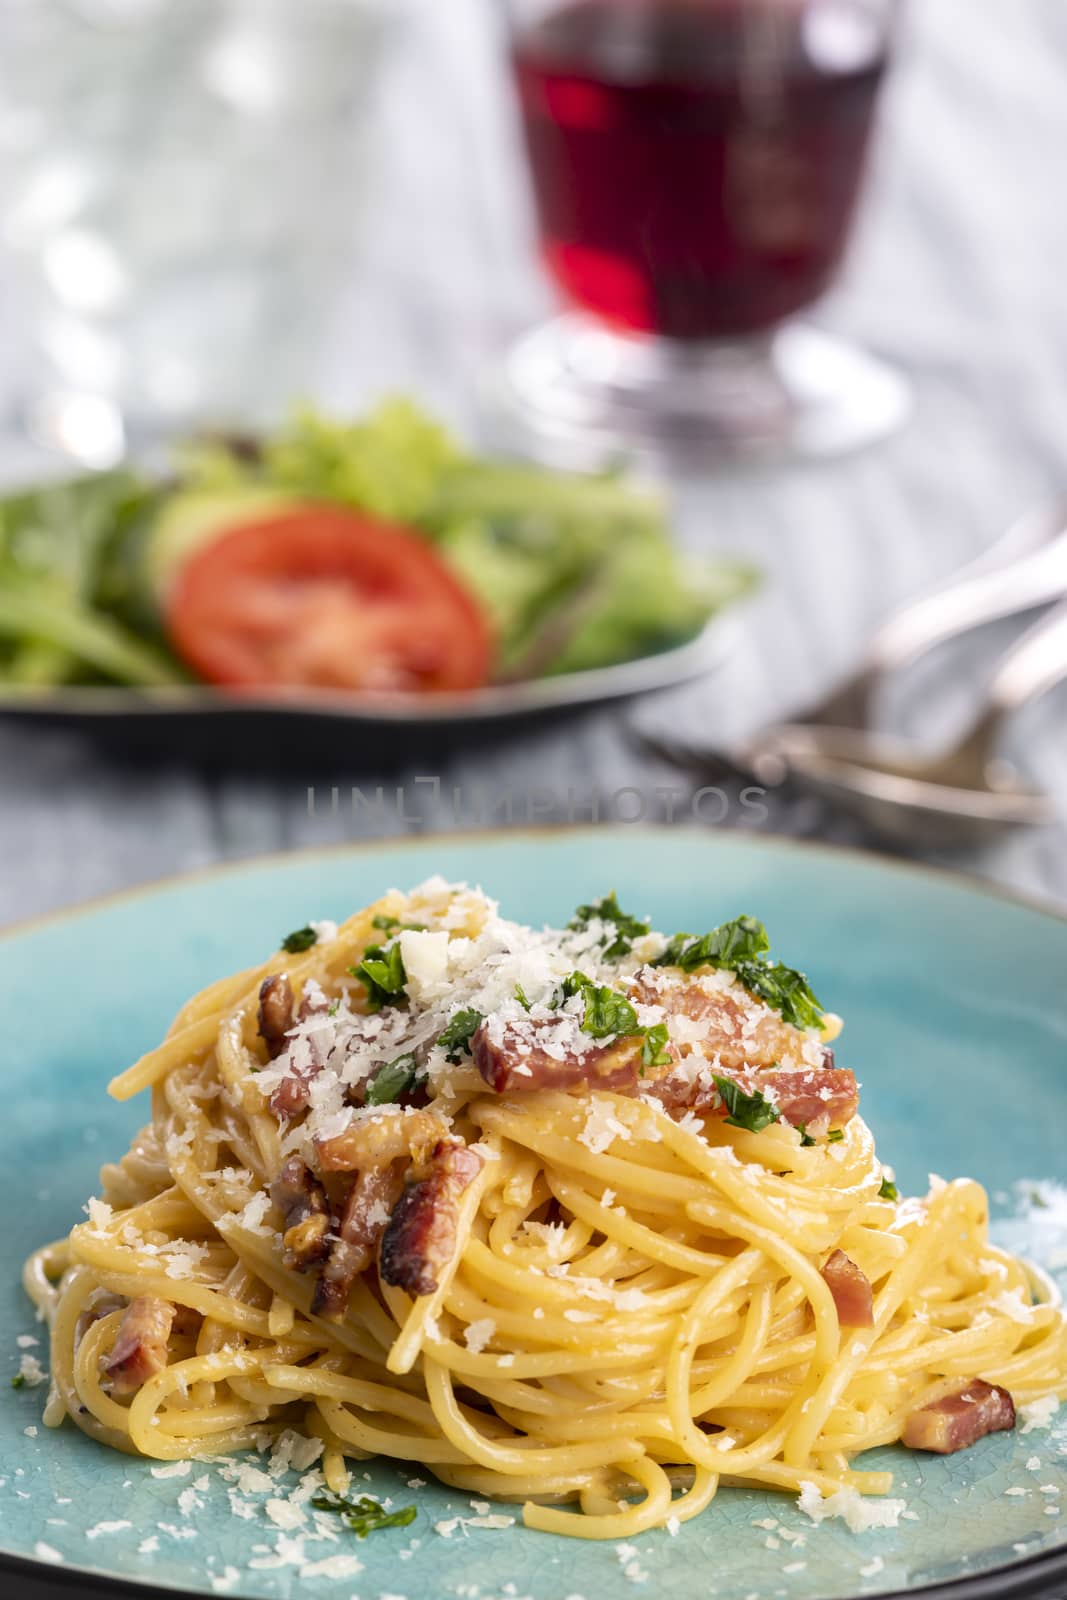 spaghetti carbonara on a blue plate